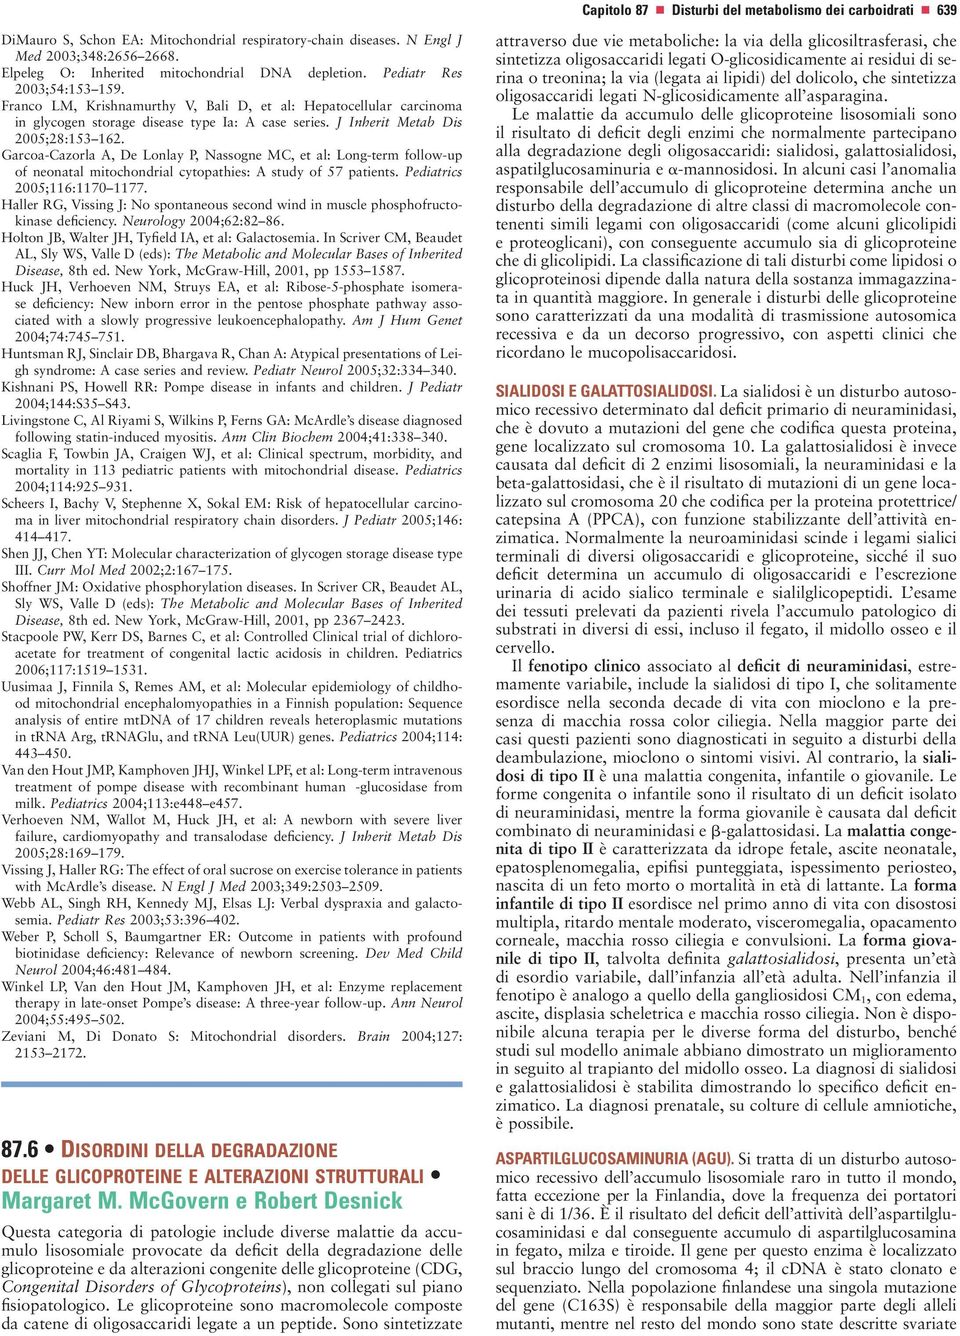 J Inherit Metab Dis 2005;28:153 162. Garcoa-Cazorla A, De Lonlay P, Nassogne MC, et al: Long-term follow-up of neonatal mitochondrial cytopathies: A study of 57 patients.